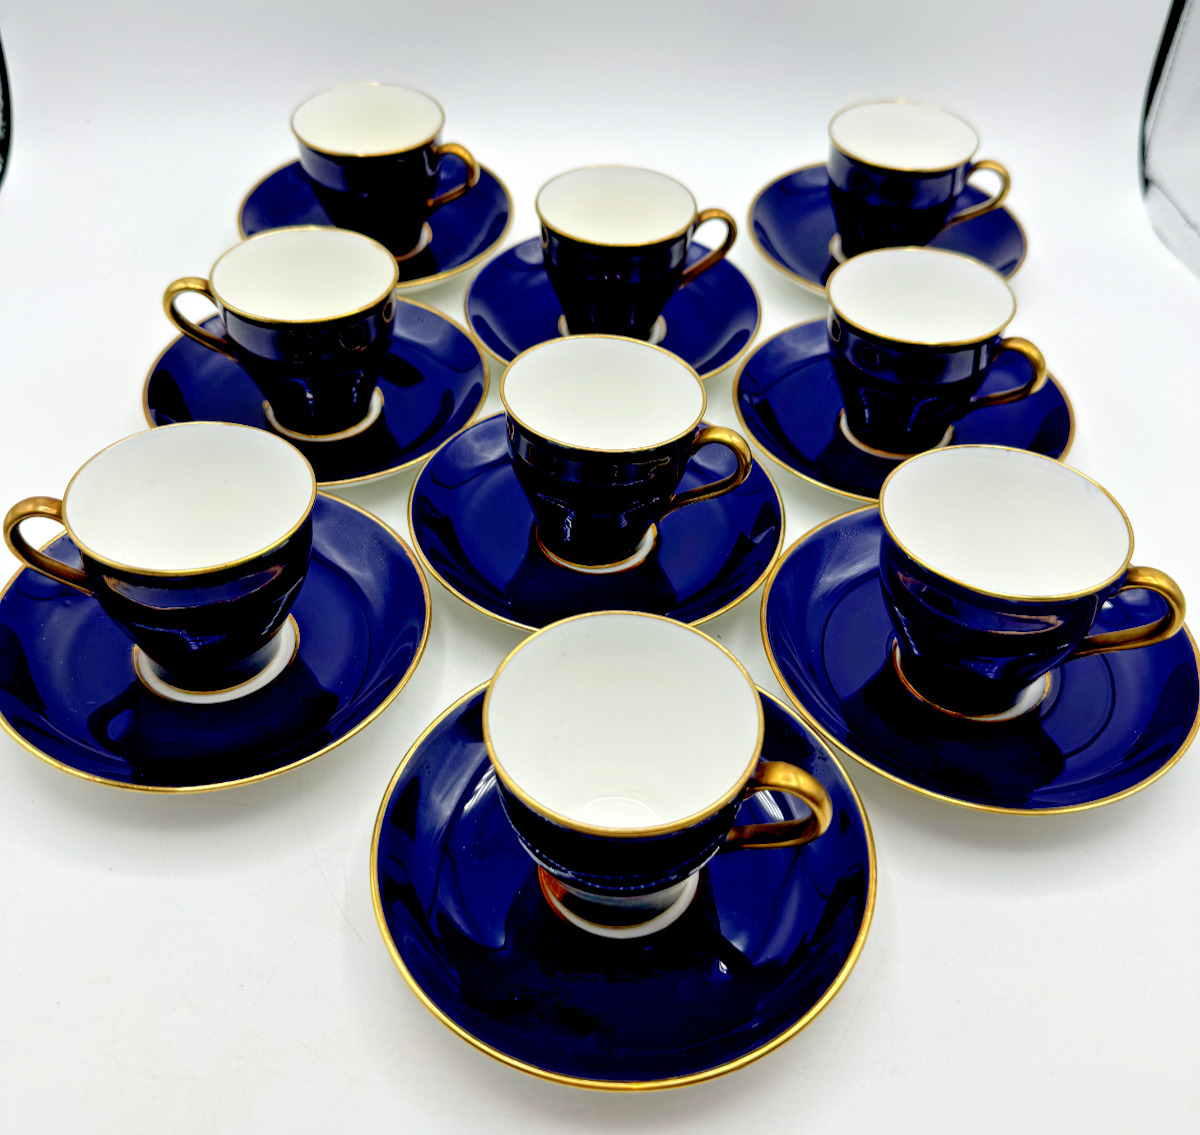 Minton's Davis Collamore NY Demitasse/ Espresso Cups Saucers 18 piece set